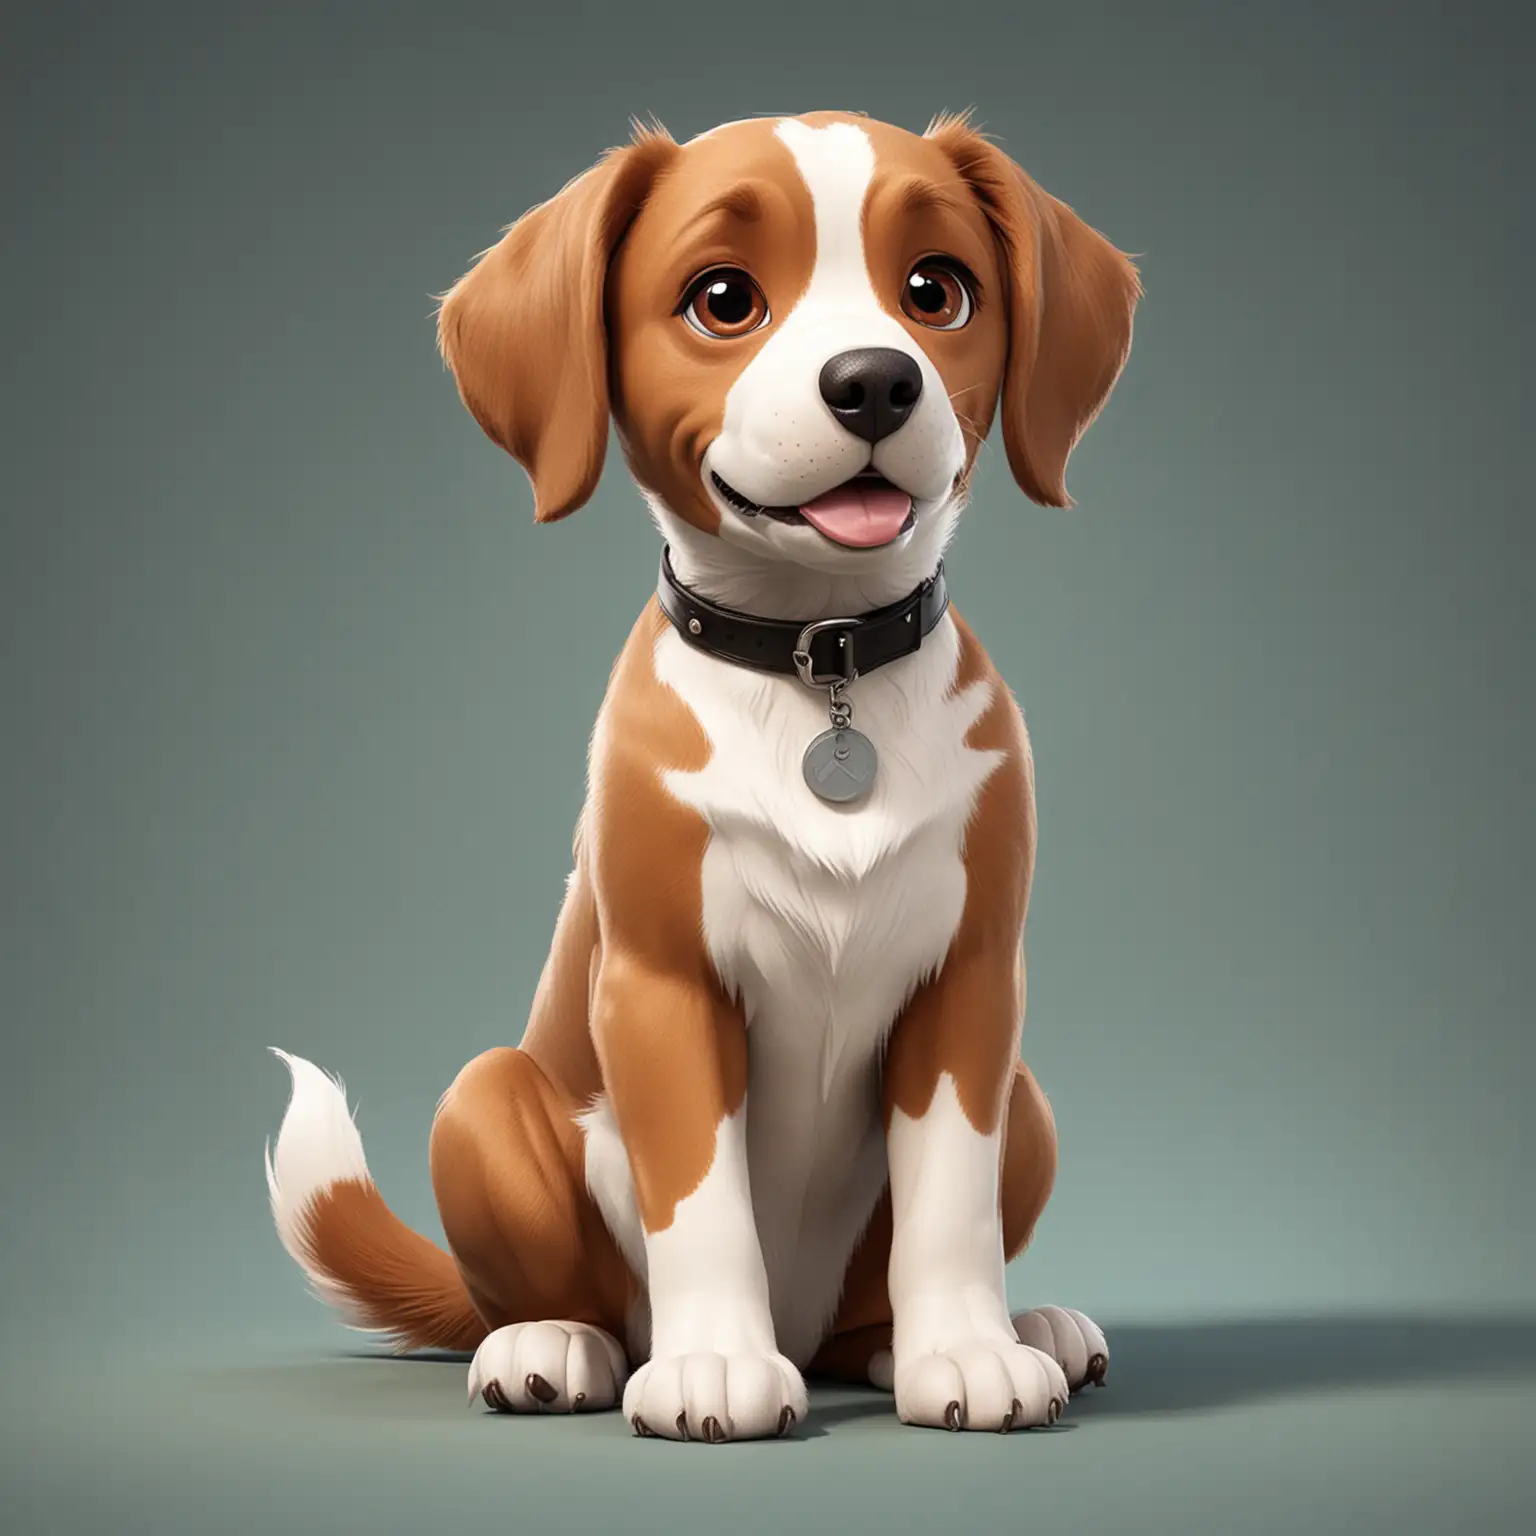 Cute-Boson-Dog-Cartoon-Illustration-in-Sitting-Pose